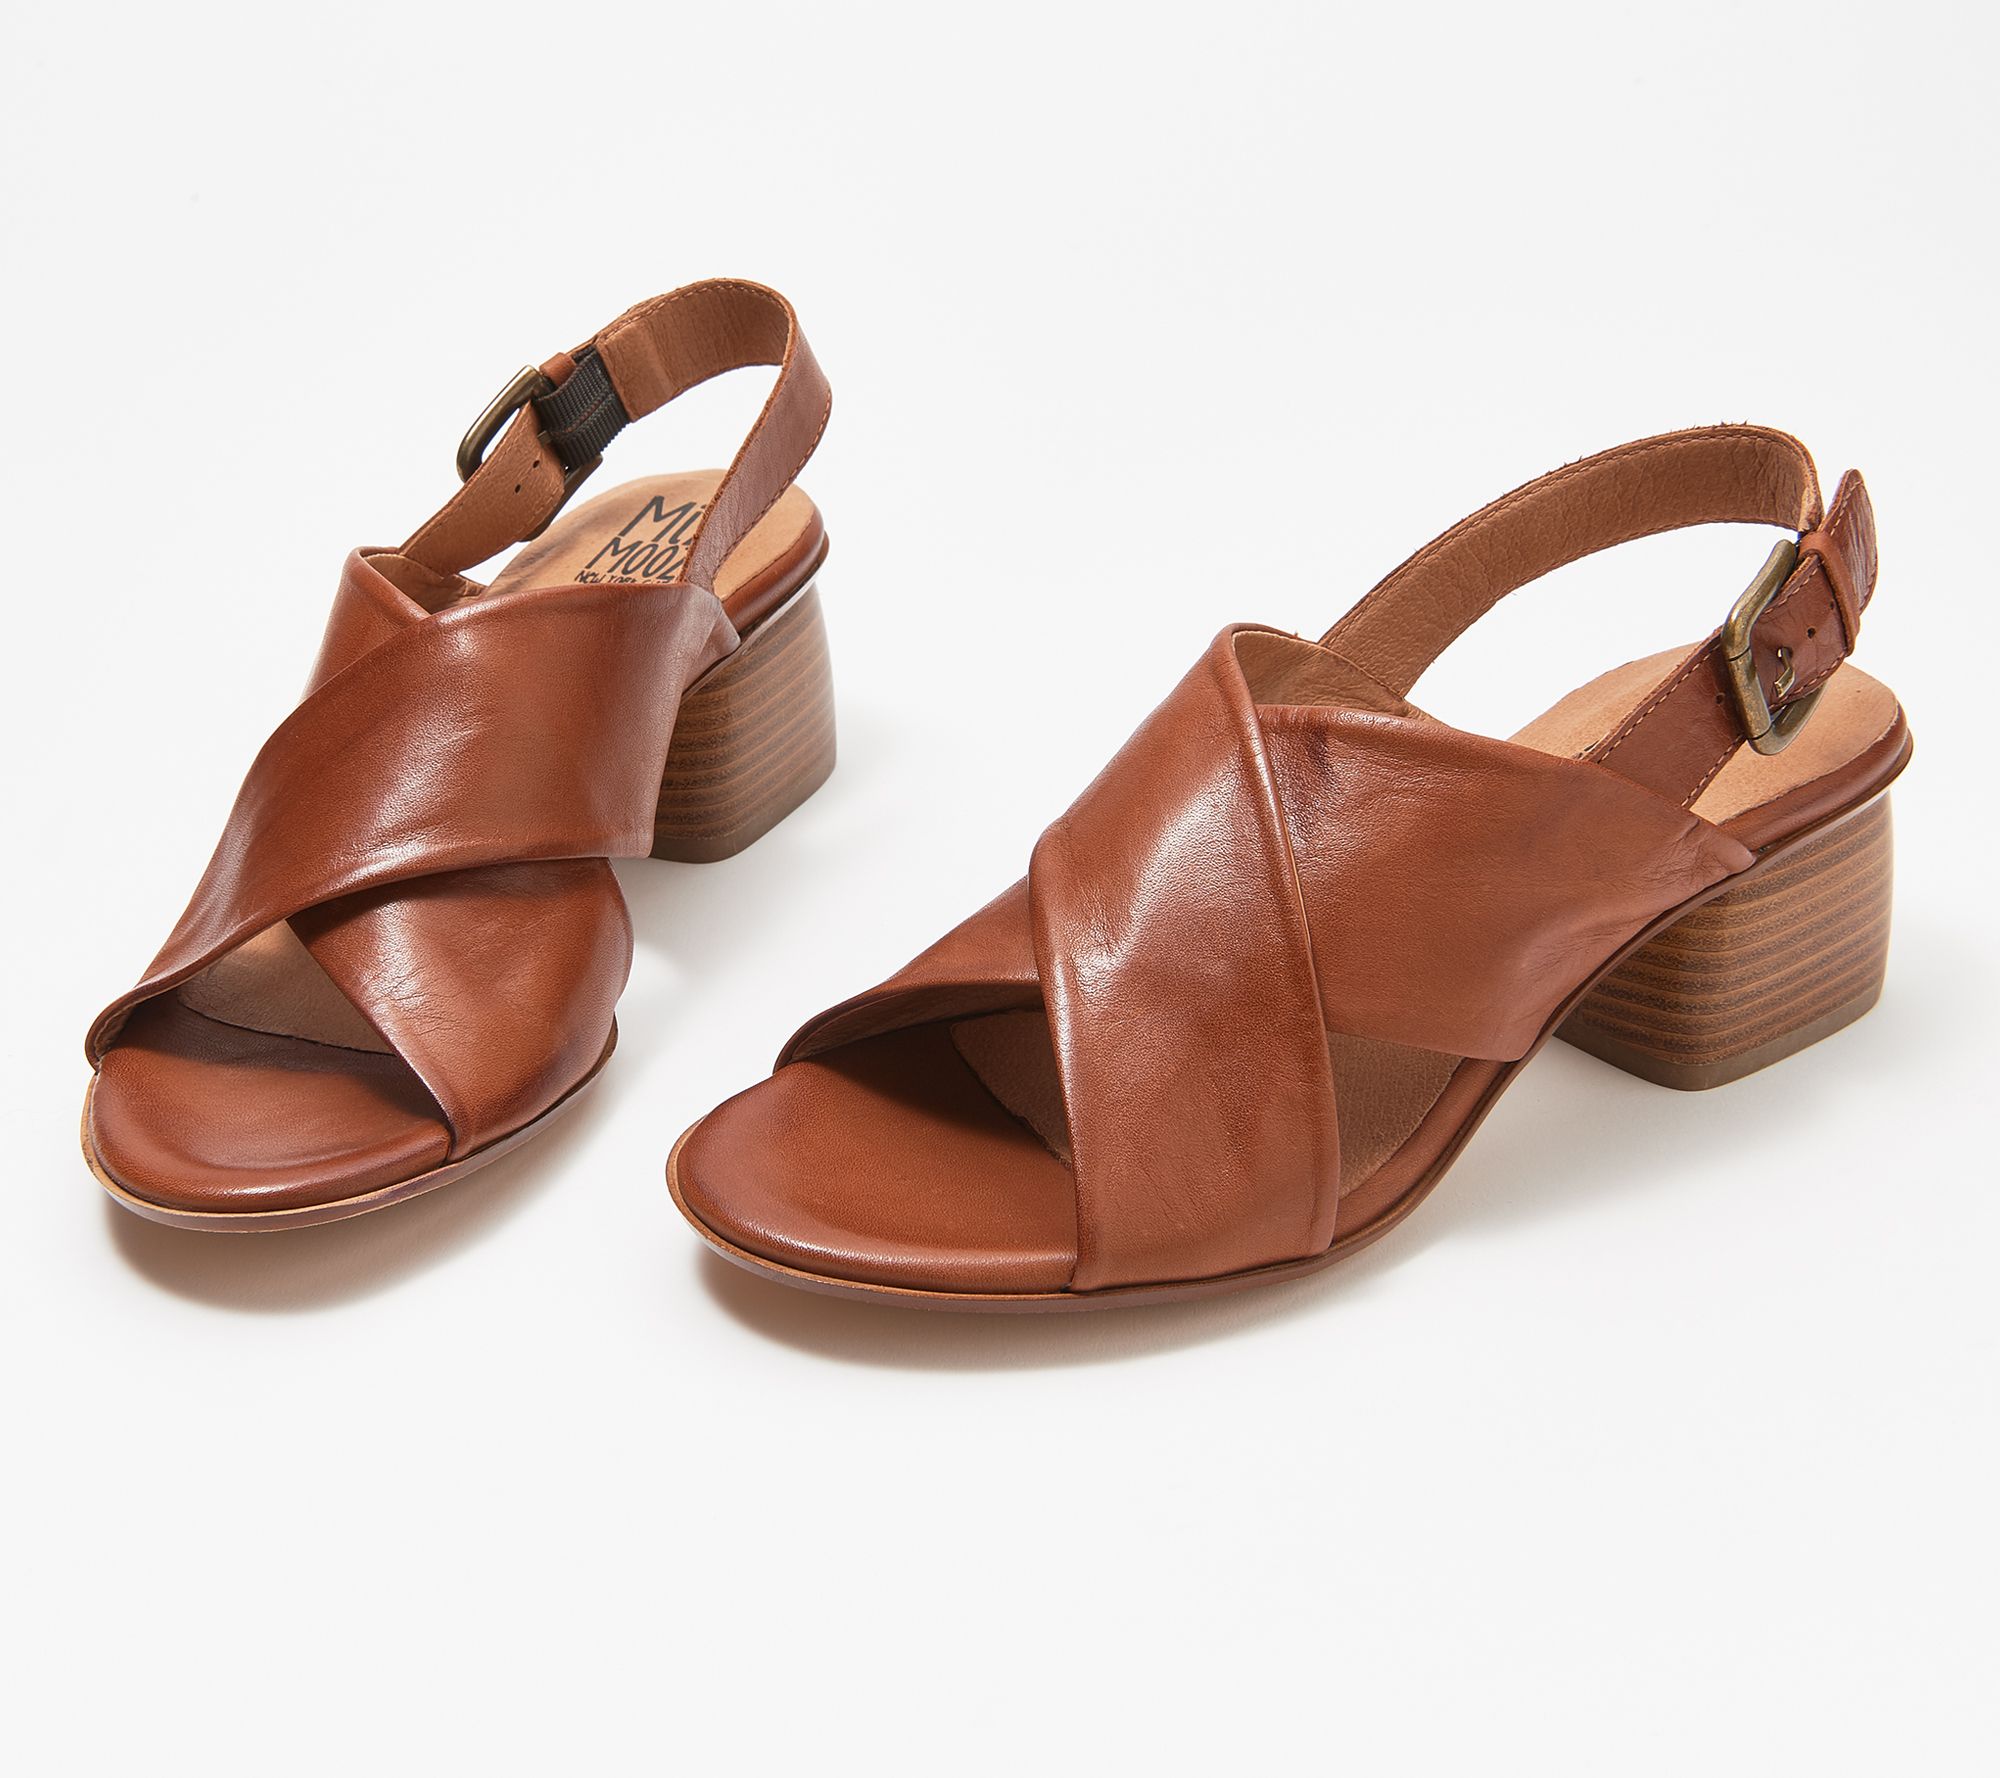 Miz Mooz Leather Cross-Strap Heeled Sandals - Natasha - QVC.com